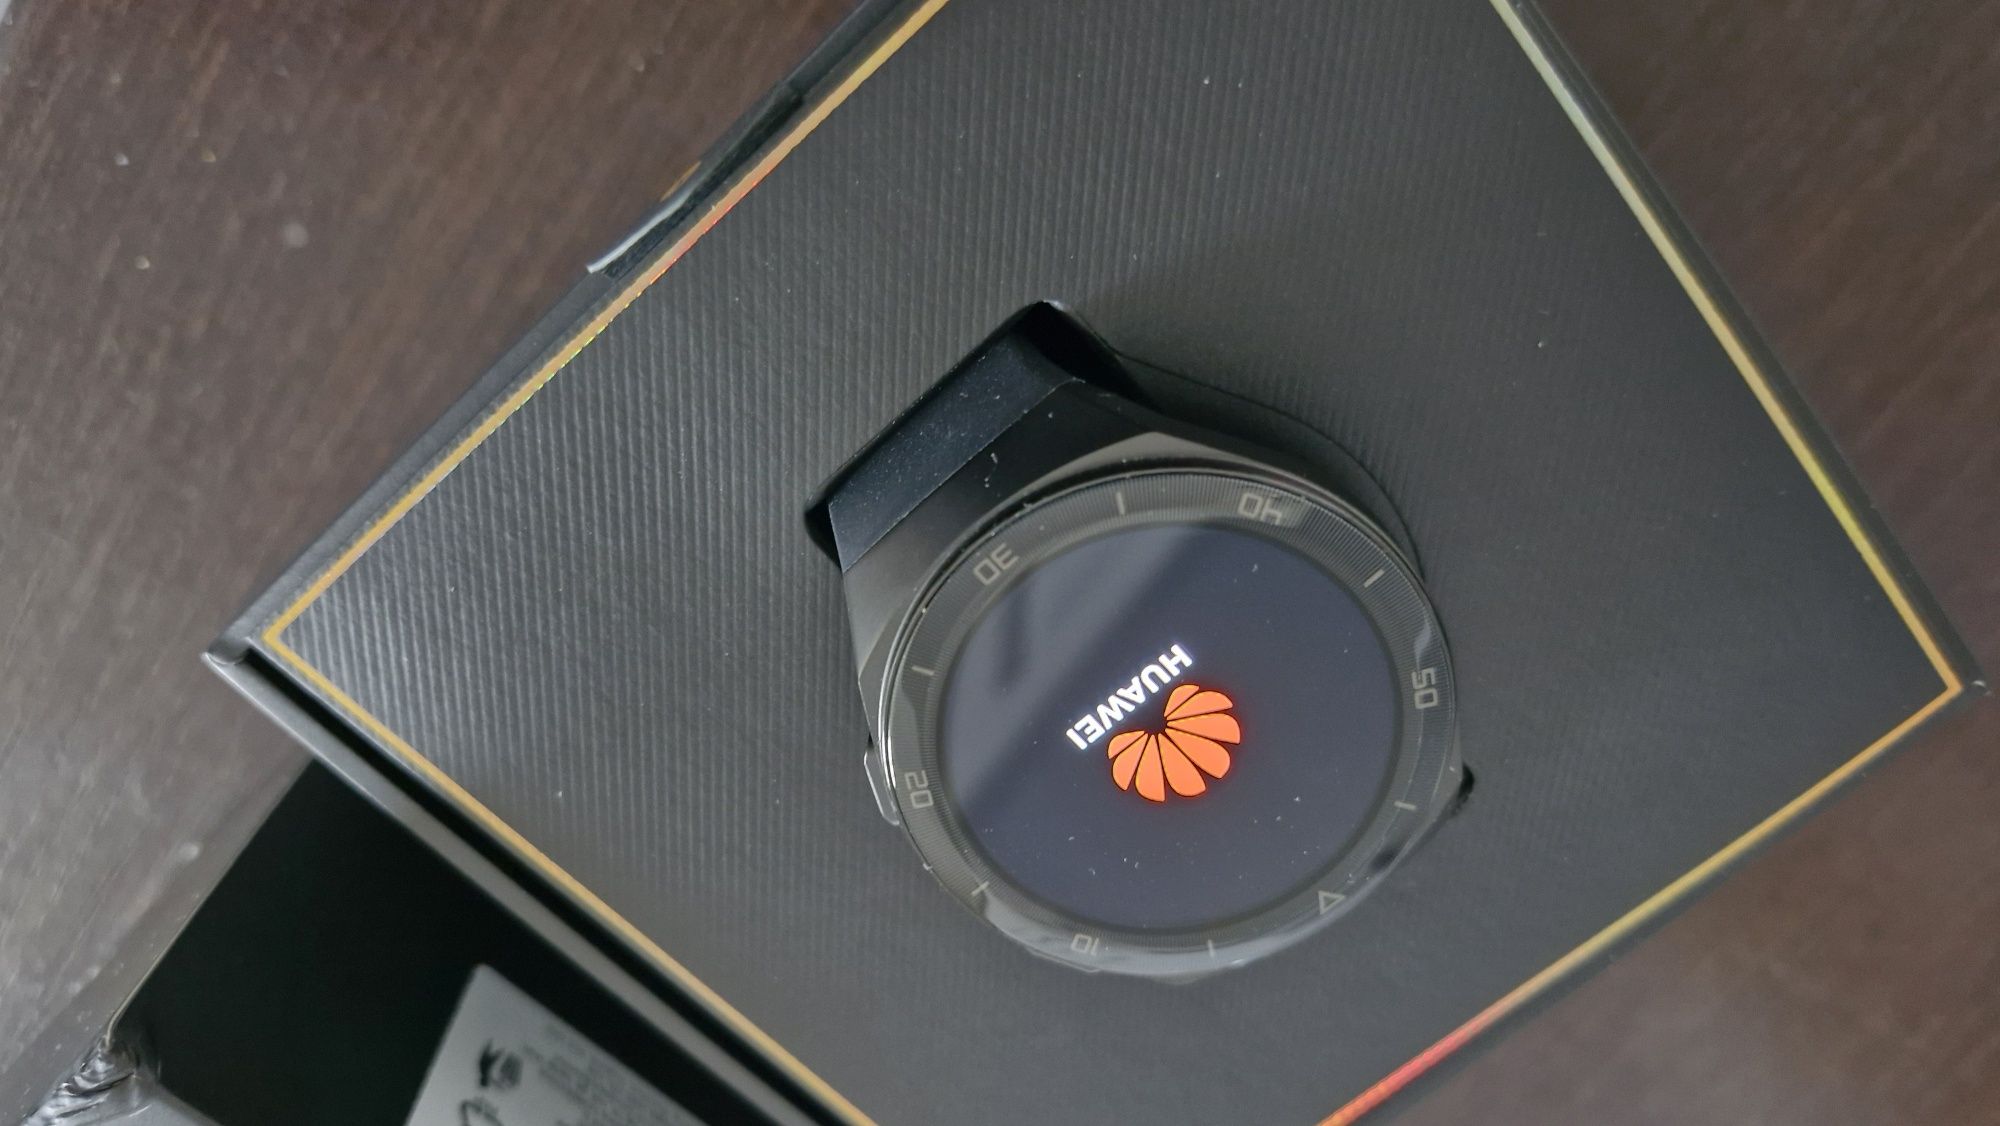 Smartwatch Huawei Watch GT 2e, 46mm, Graphite Black